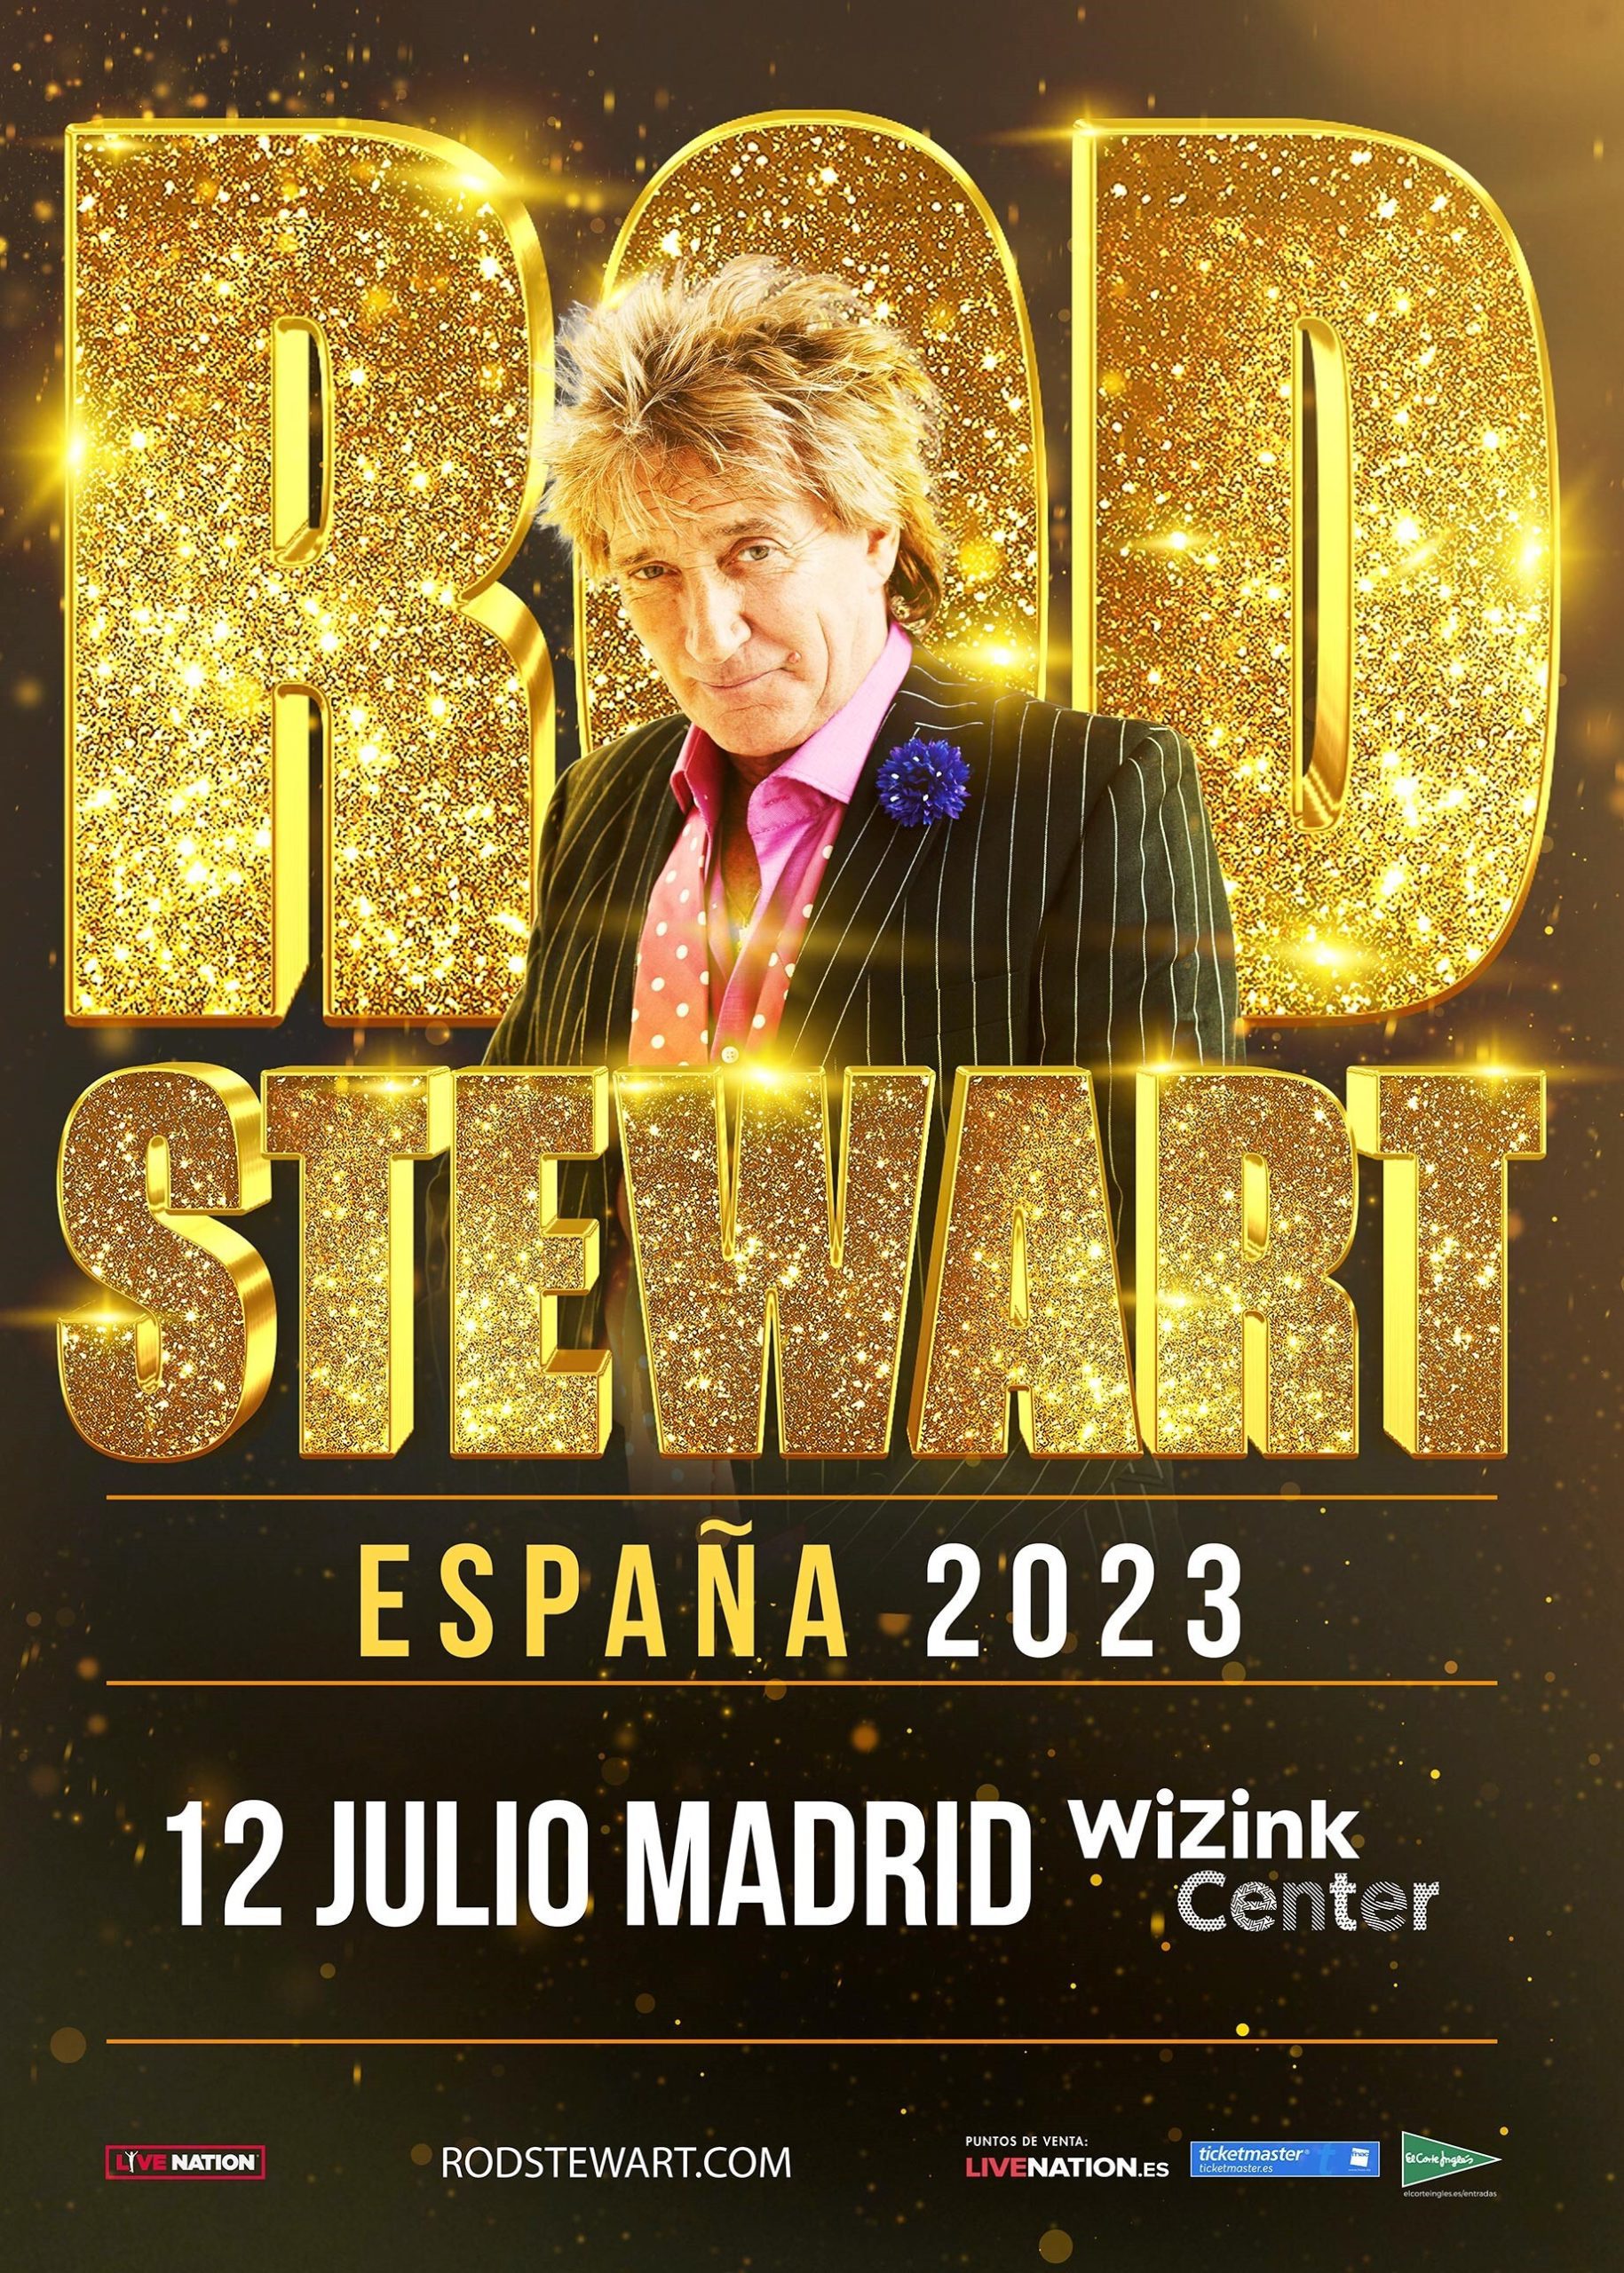 Rod Stewart en Madrid próximo 12 de julio